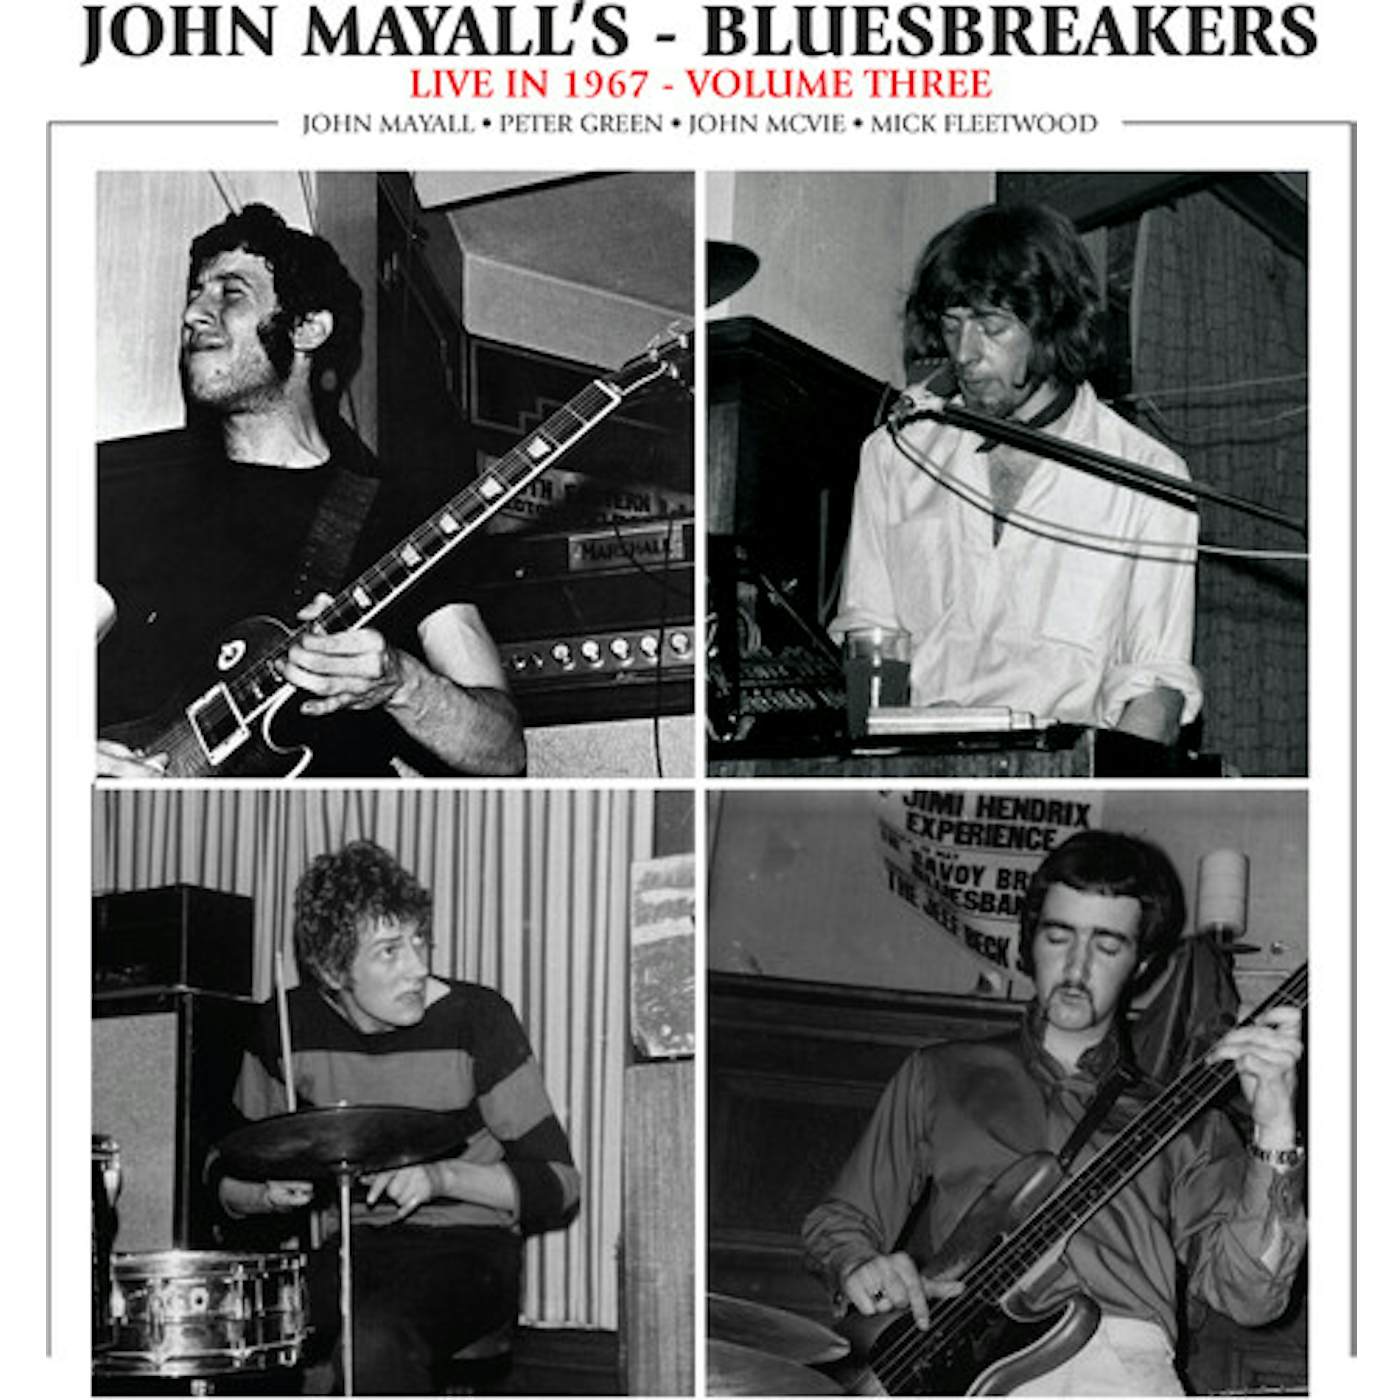 John Mayall & The Bluesbreakers LIVE IN 1967 VOL. 3 Vinyl Record